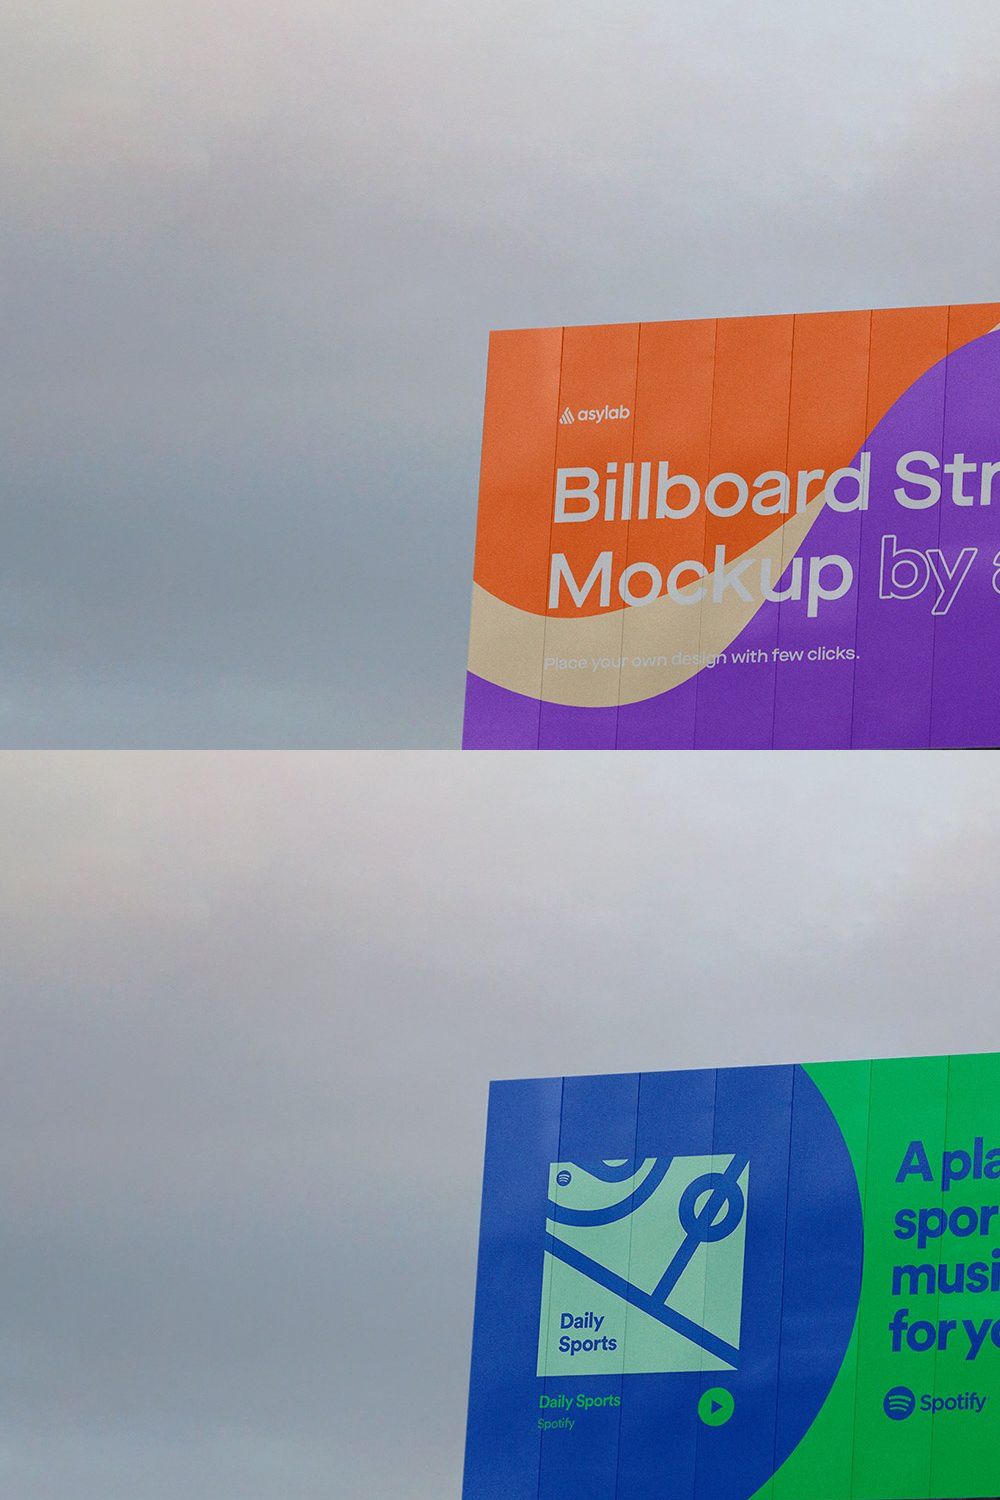 Billboard Urban Street Mockup - PSD pinterest preview image.